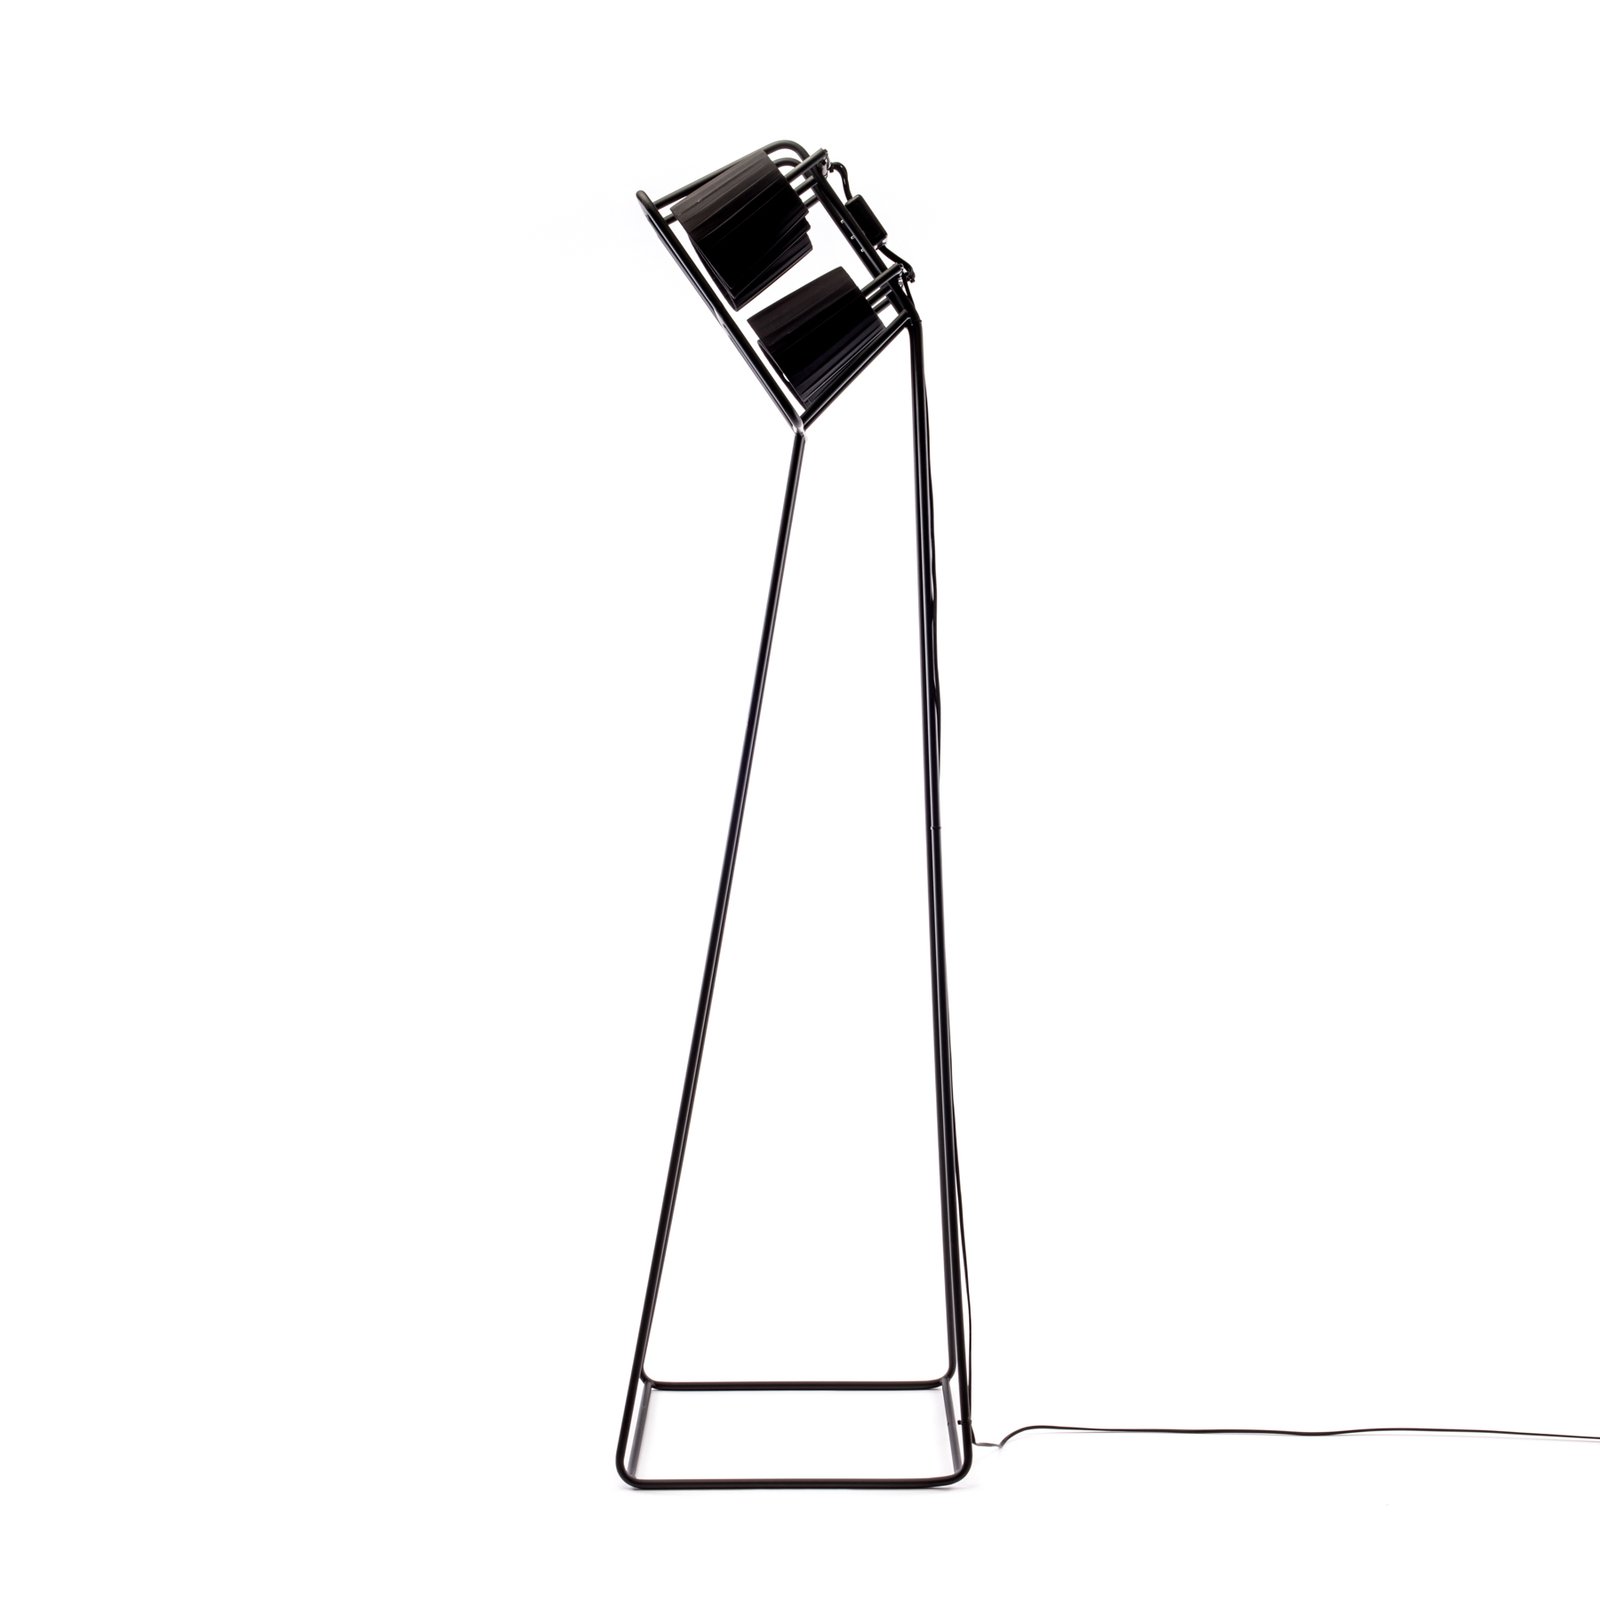 Stojacia lampa Multilamp, 6-plameňová, čierna